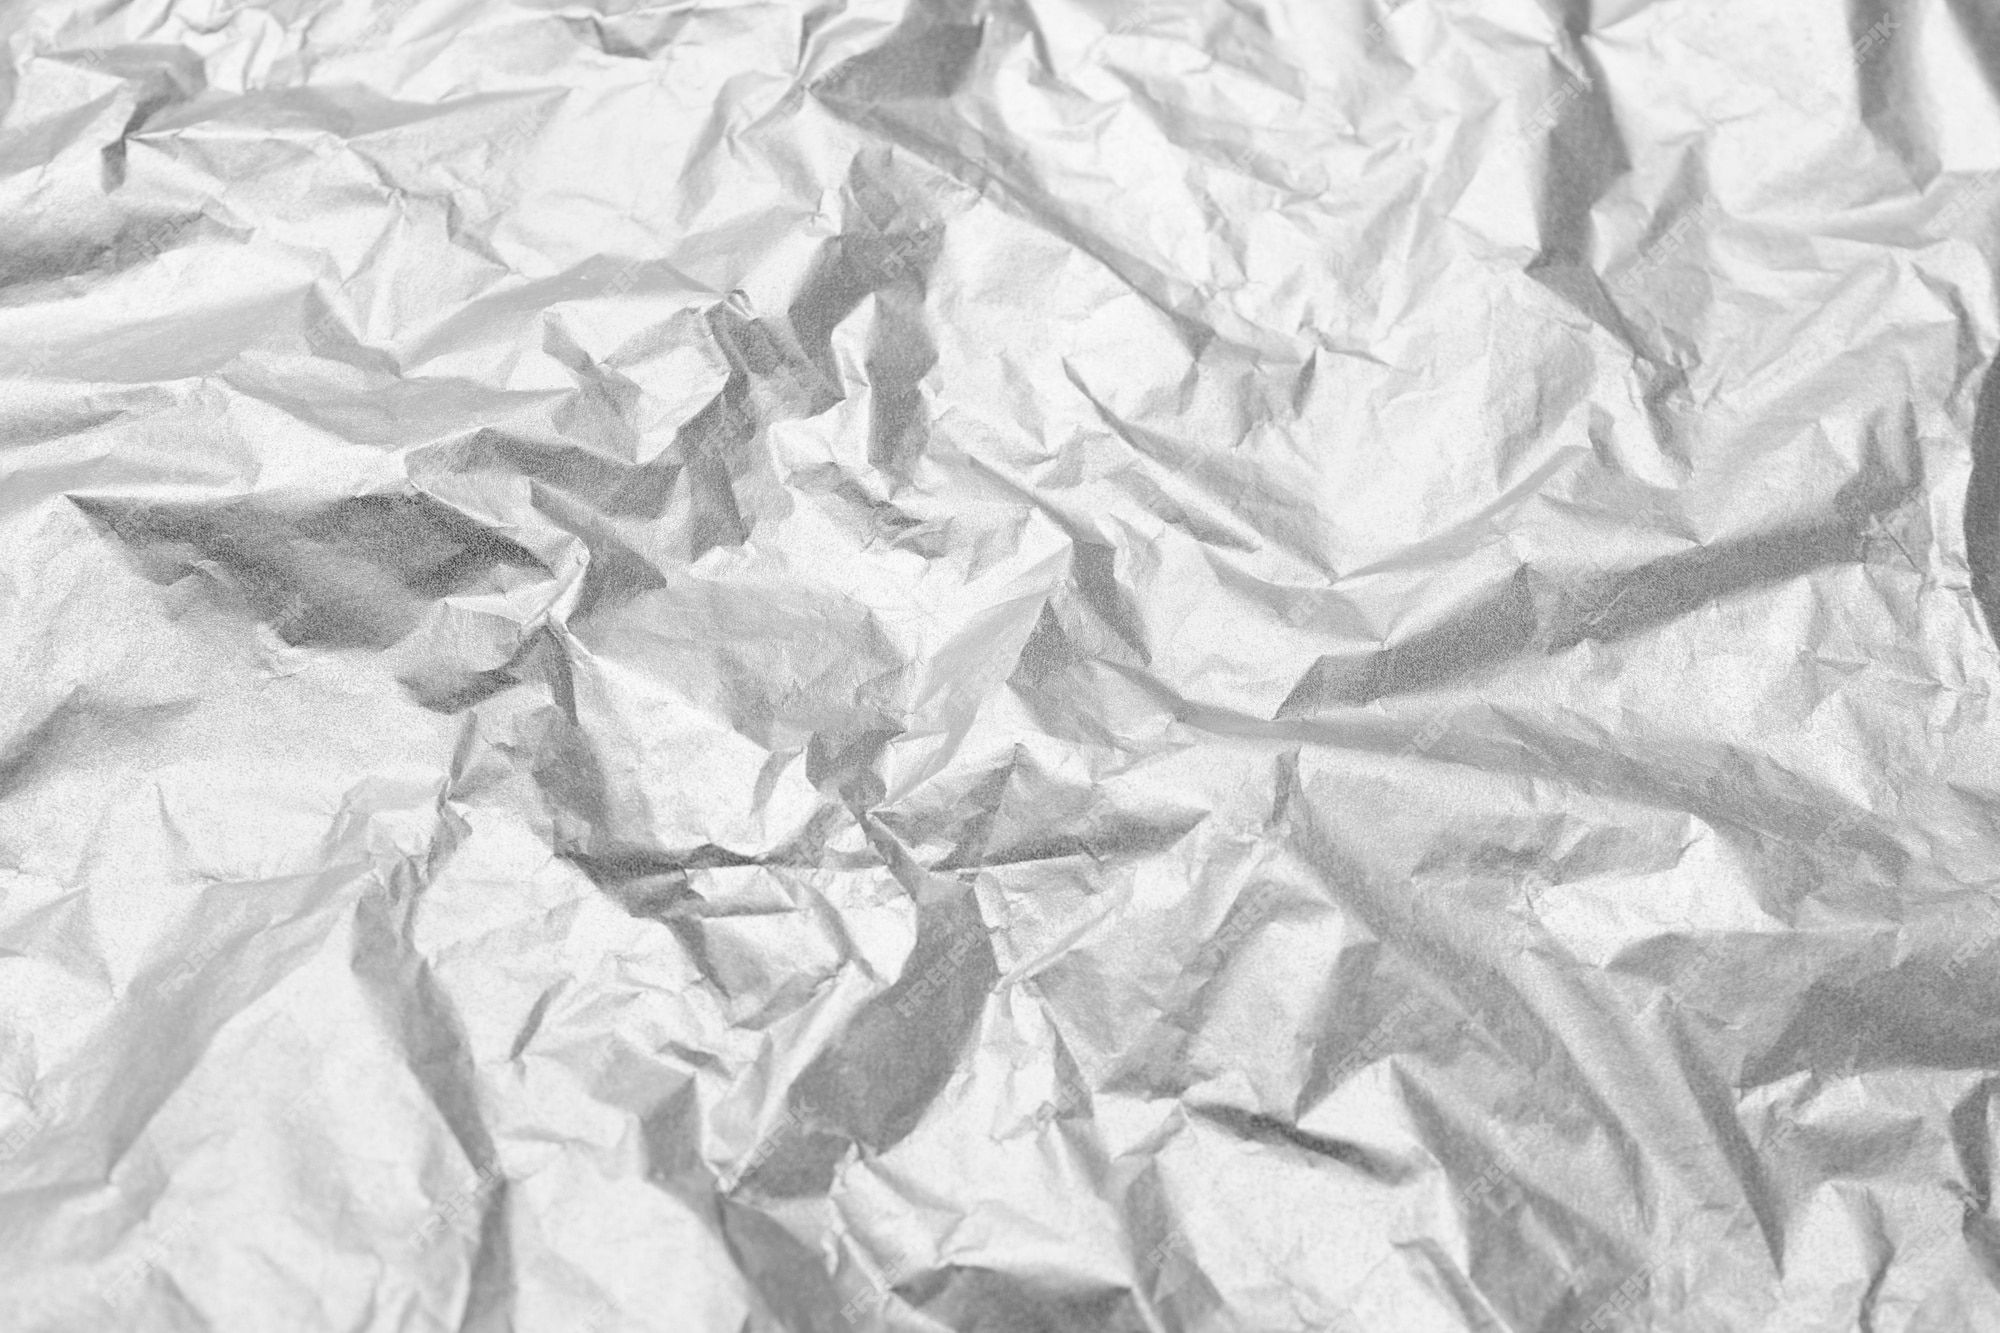  Silber Hintergrundbild 2000x1333. Free Photo. Silver aesthetic wallpaper with foil